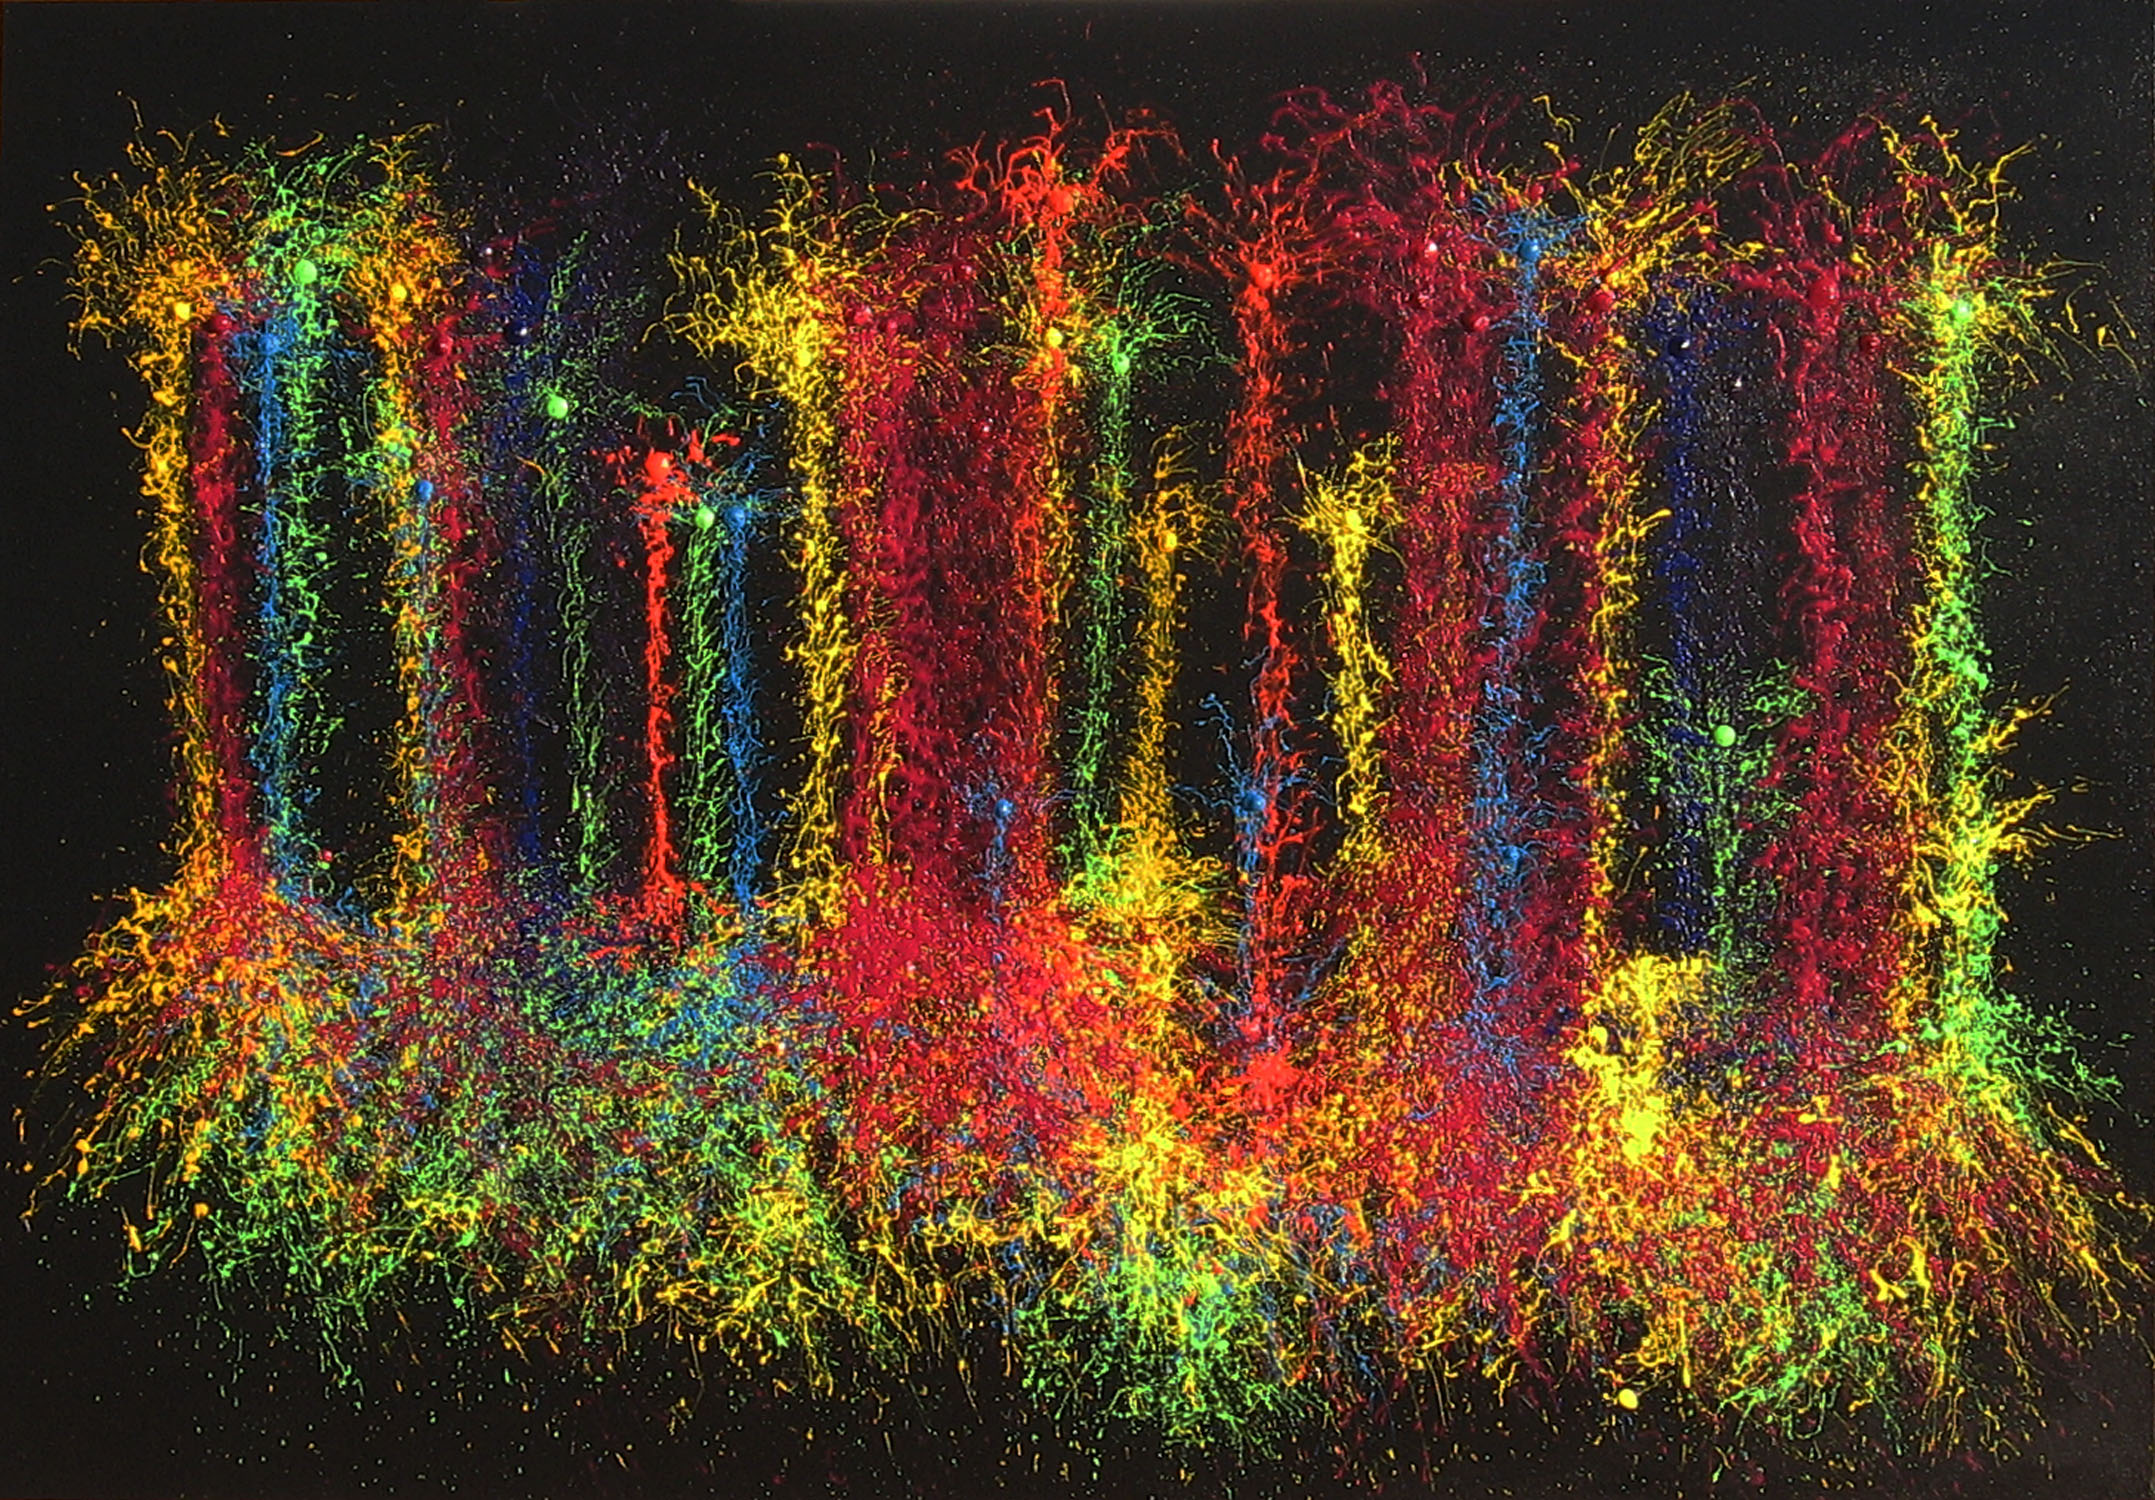 Piramidal Neurons by Microscope